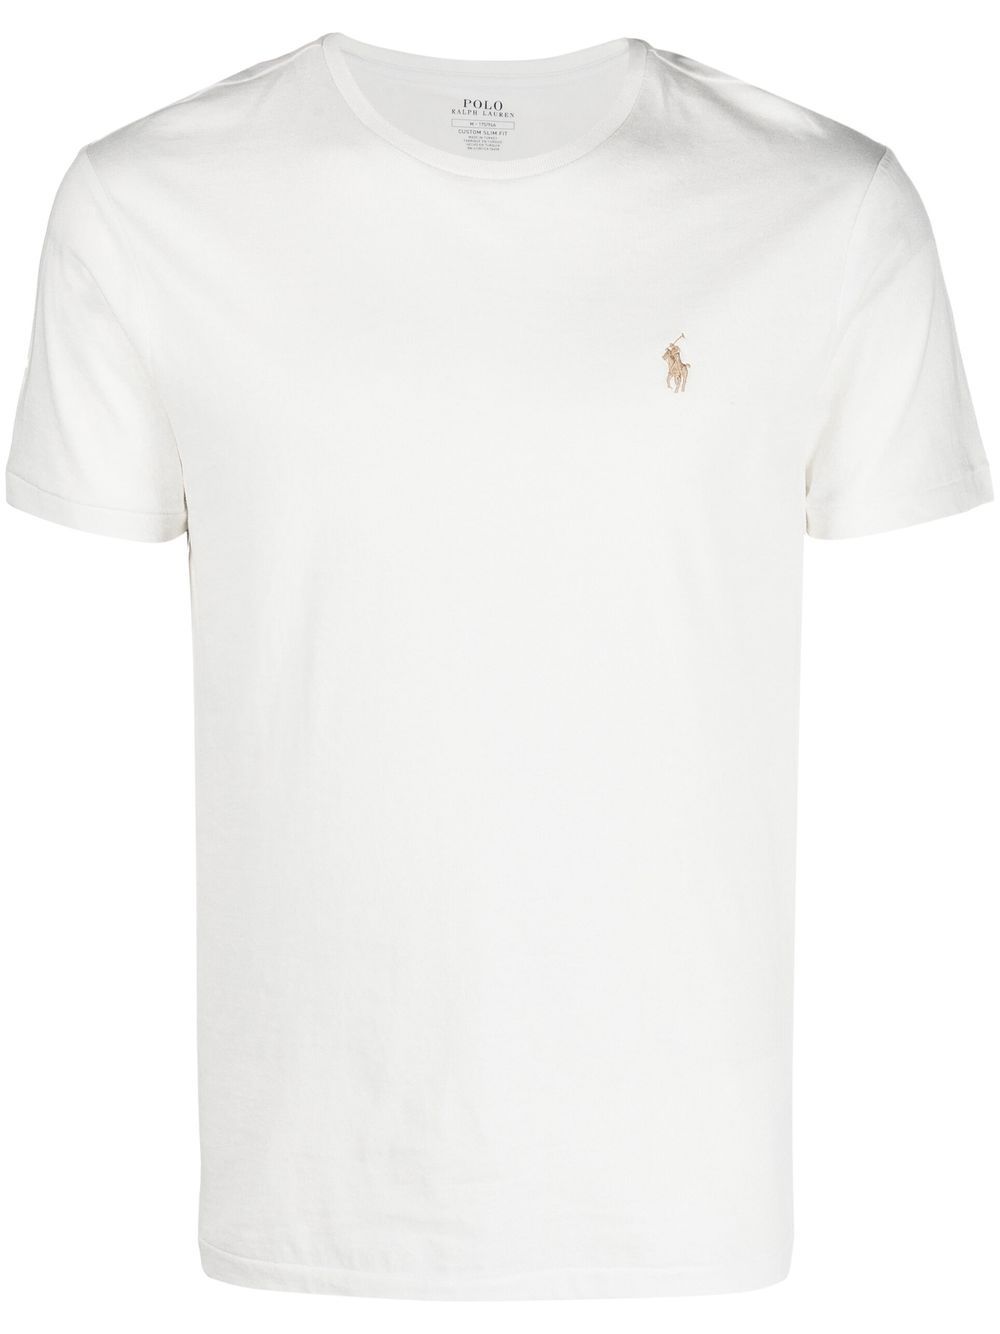 Polo Ralph Lauren logo-embroidered cotton T-shirt